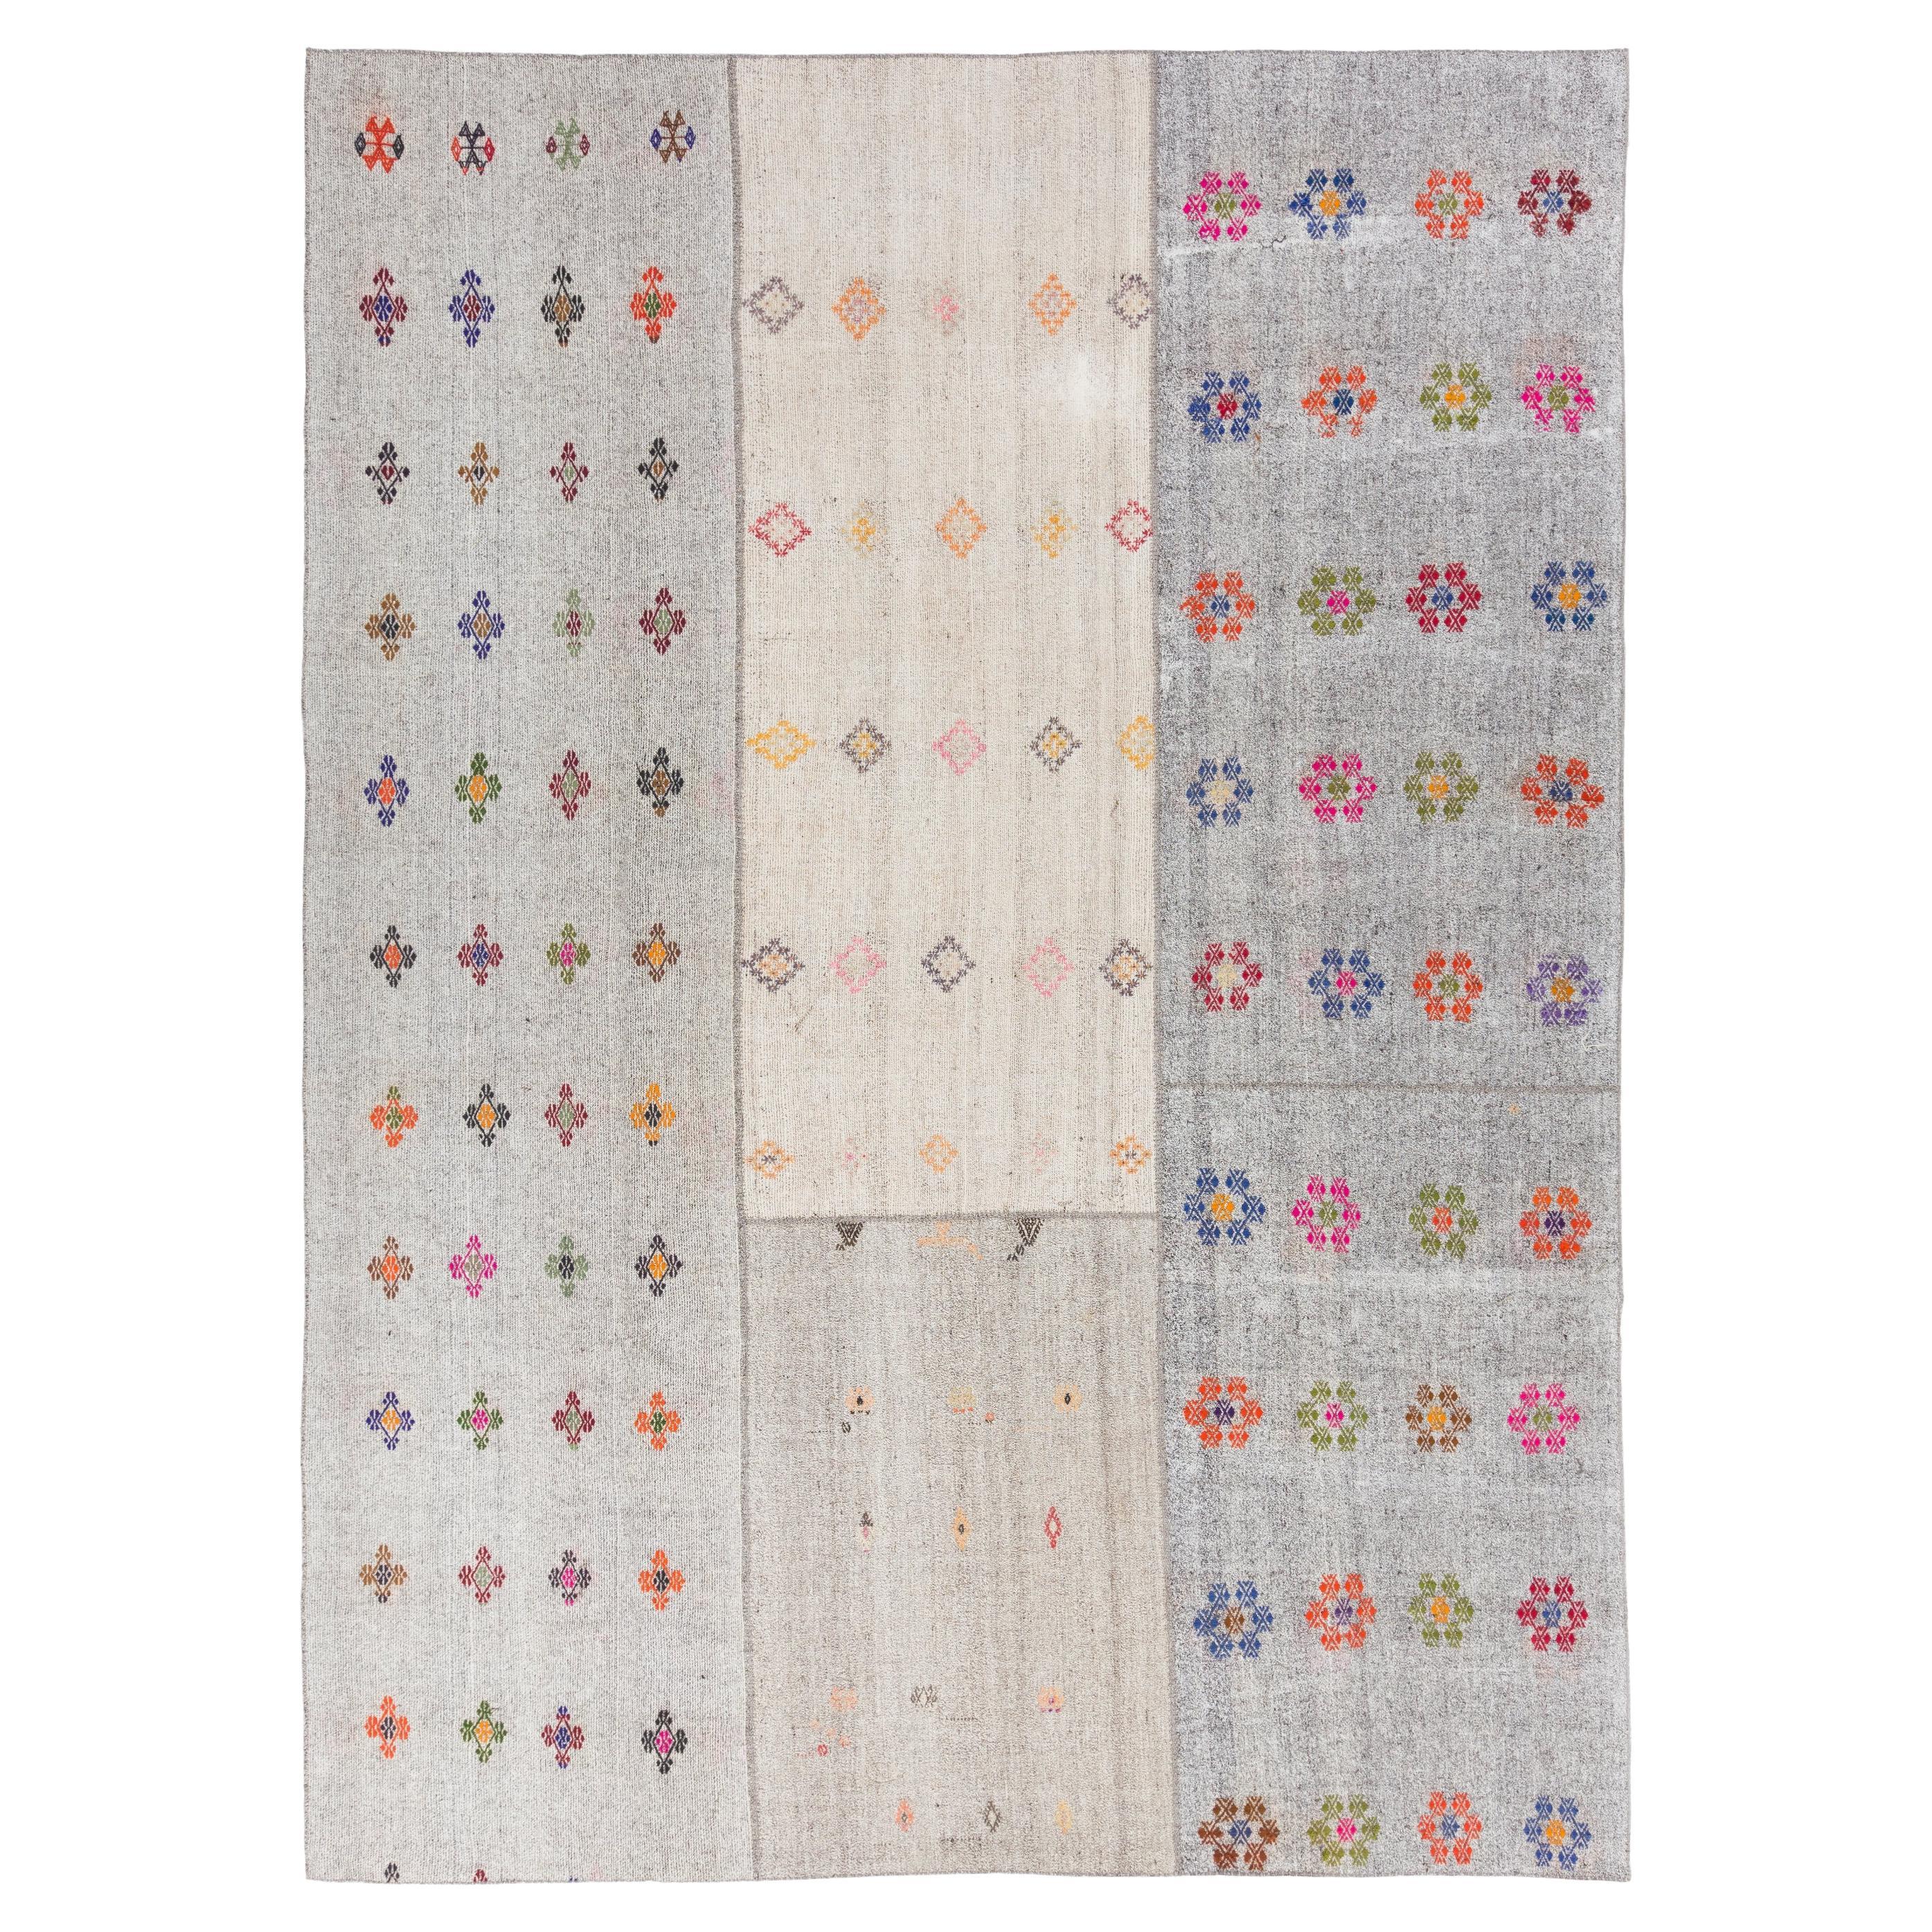 10.5x14.3 Ft Vintage Turkish Kilim Rug. Handmade Floor Covering, Floral Carpet. 